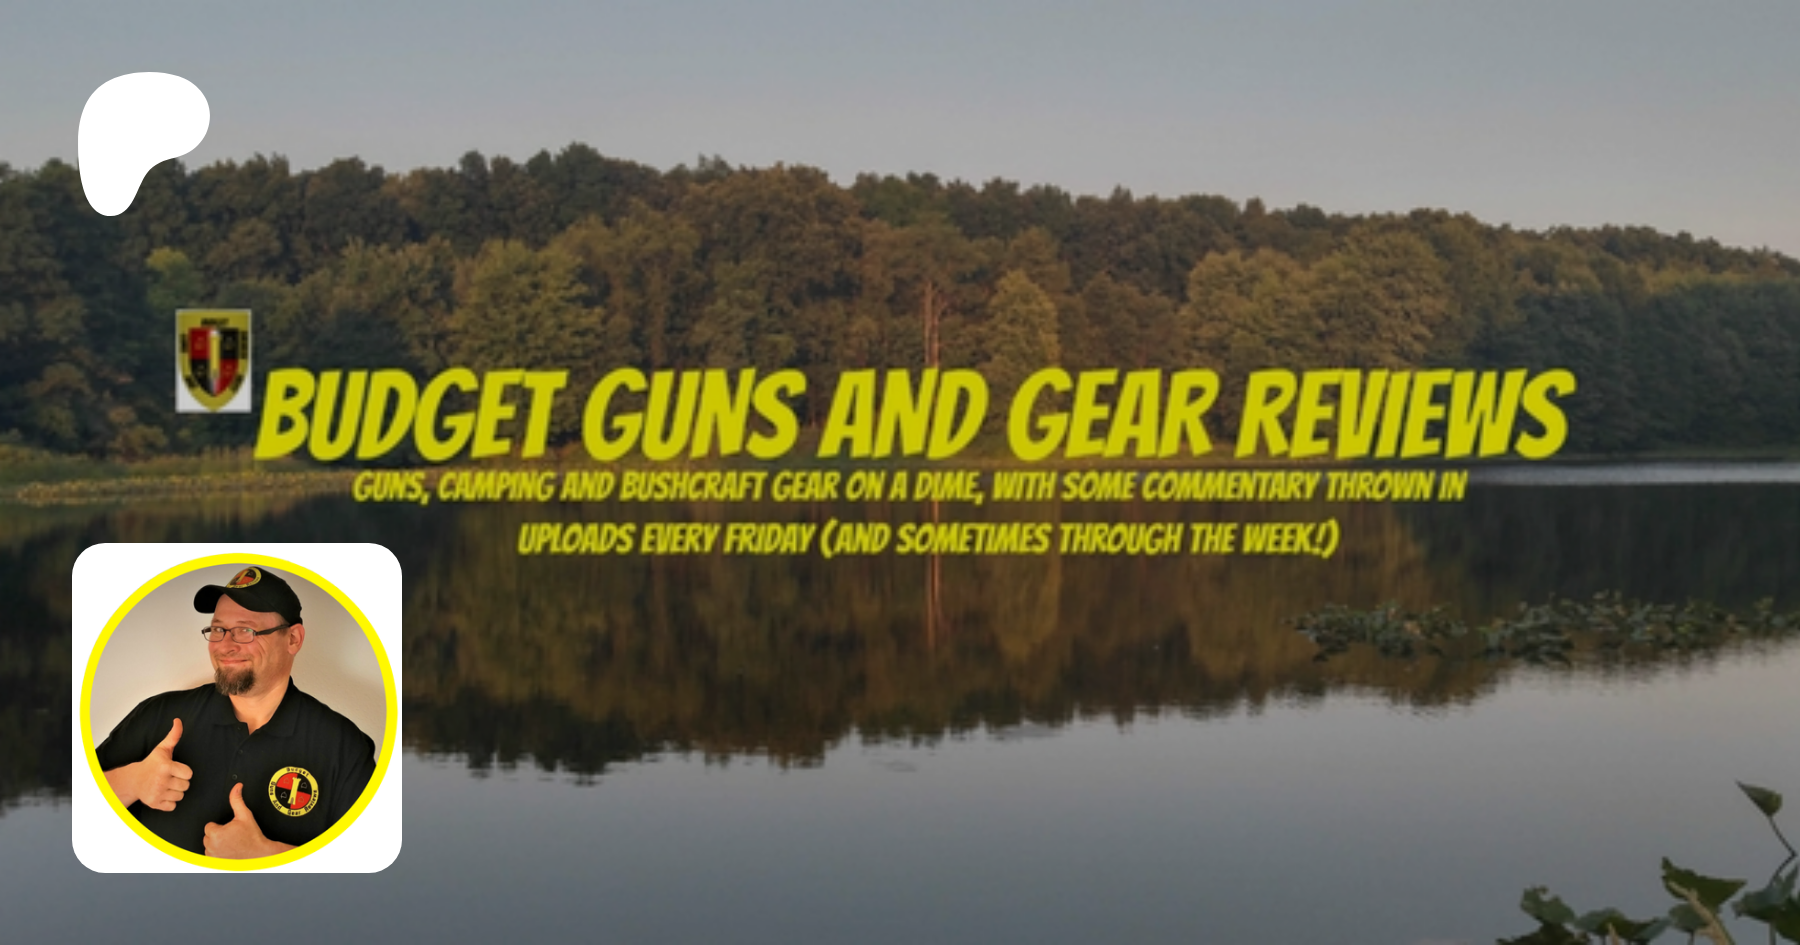 Budget Guns and Gear Reviews  creating Video reviews of budget